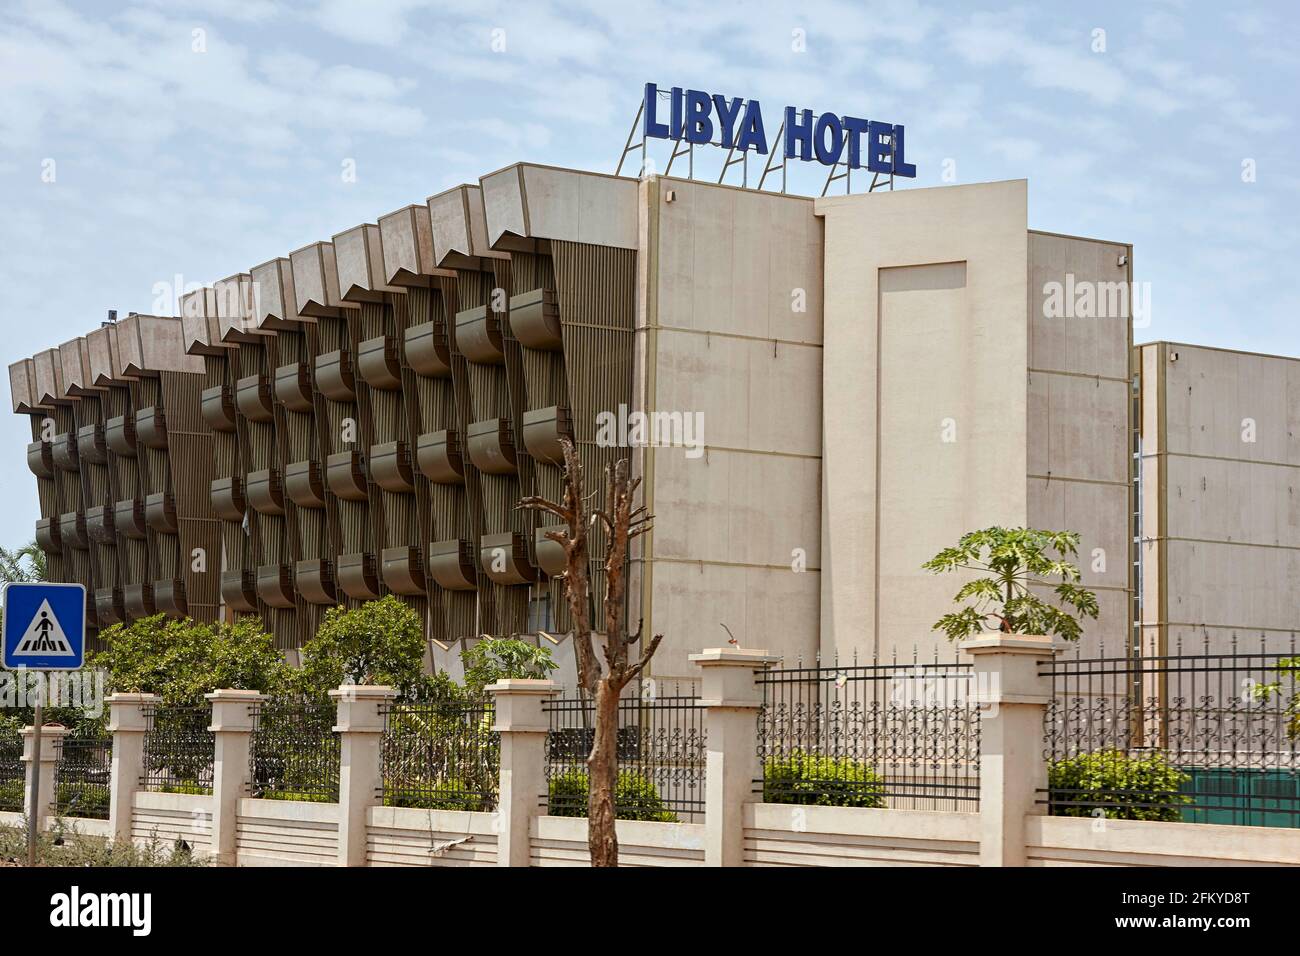 Libye Hôtel à Bissau Guinée-Bissau Afrique Banque D'Images